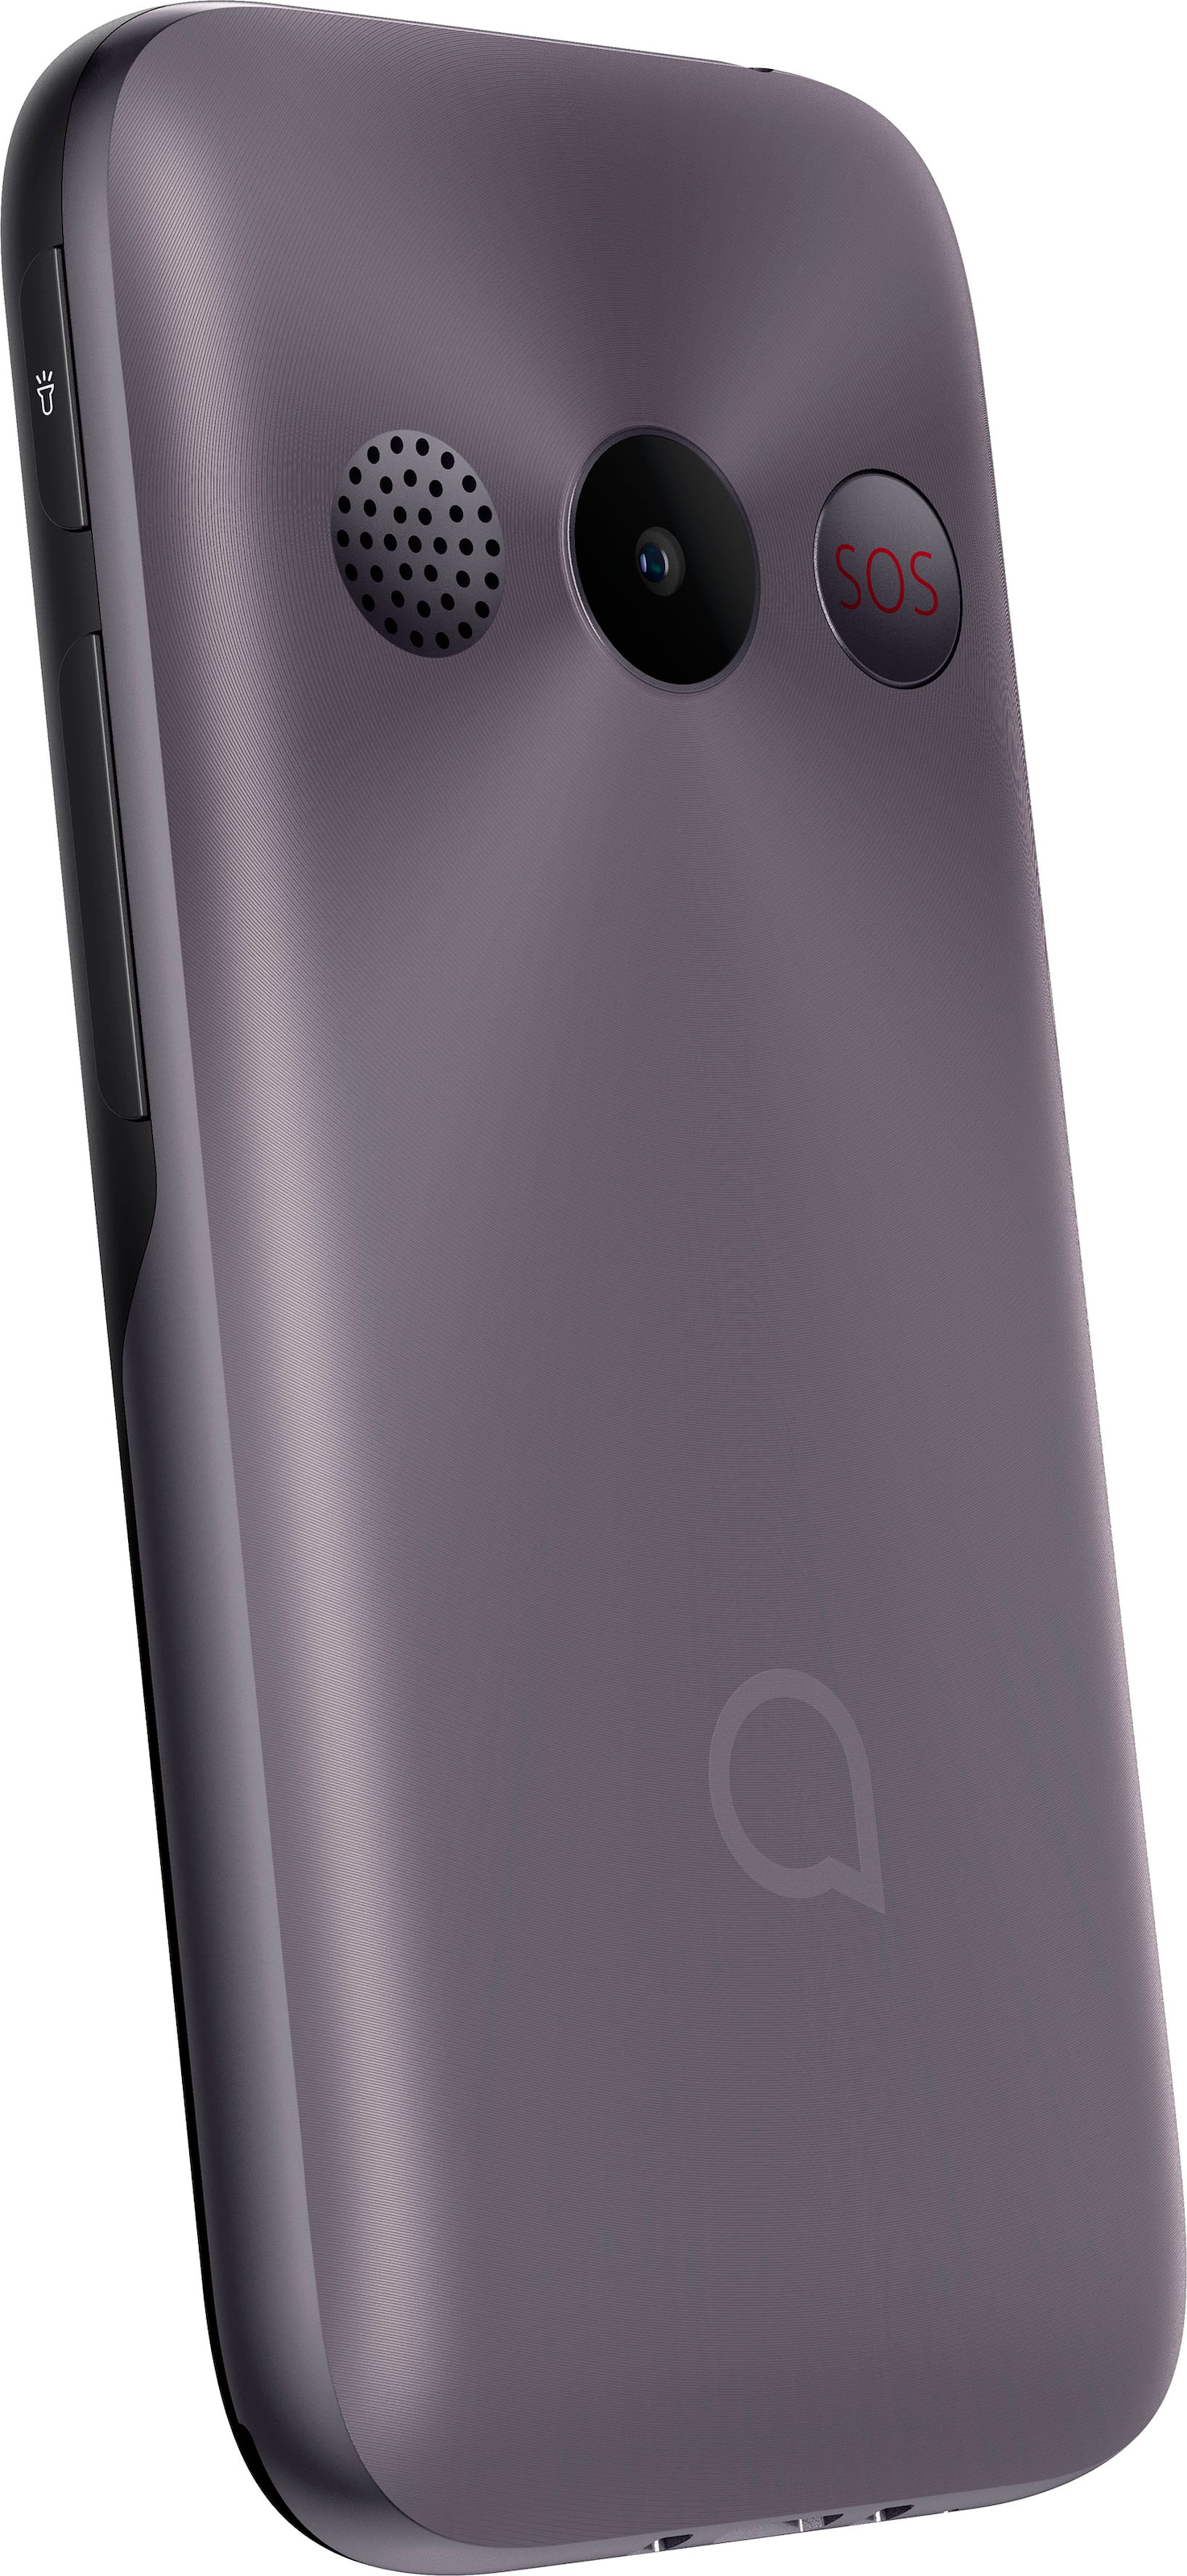 Alcatel Handy »2020«, Metallic Gray, bestellen OTTO jetzt Zoll 6,10 cm/2,4 bei